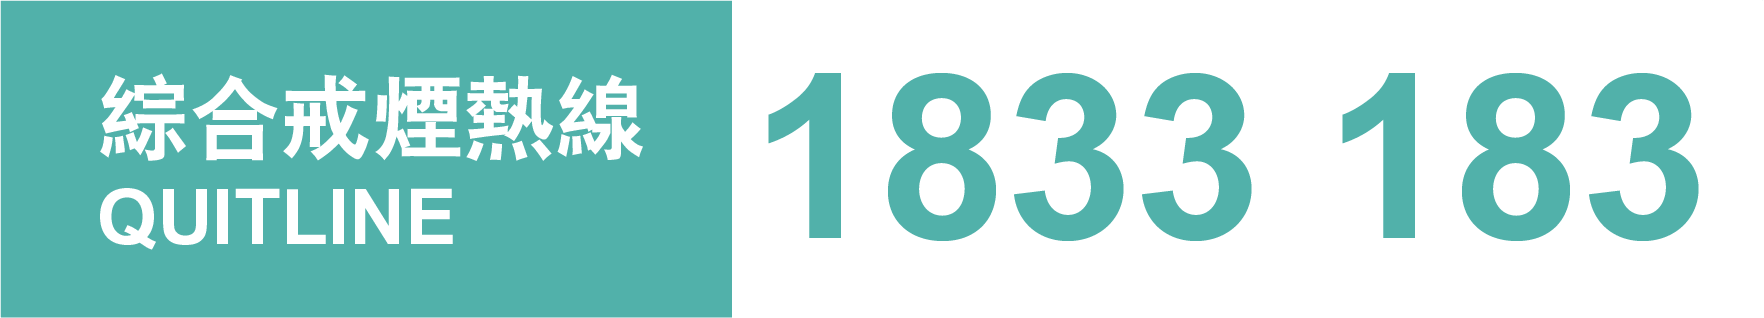 QUITLINE 1833 183